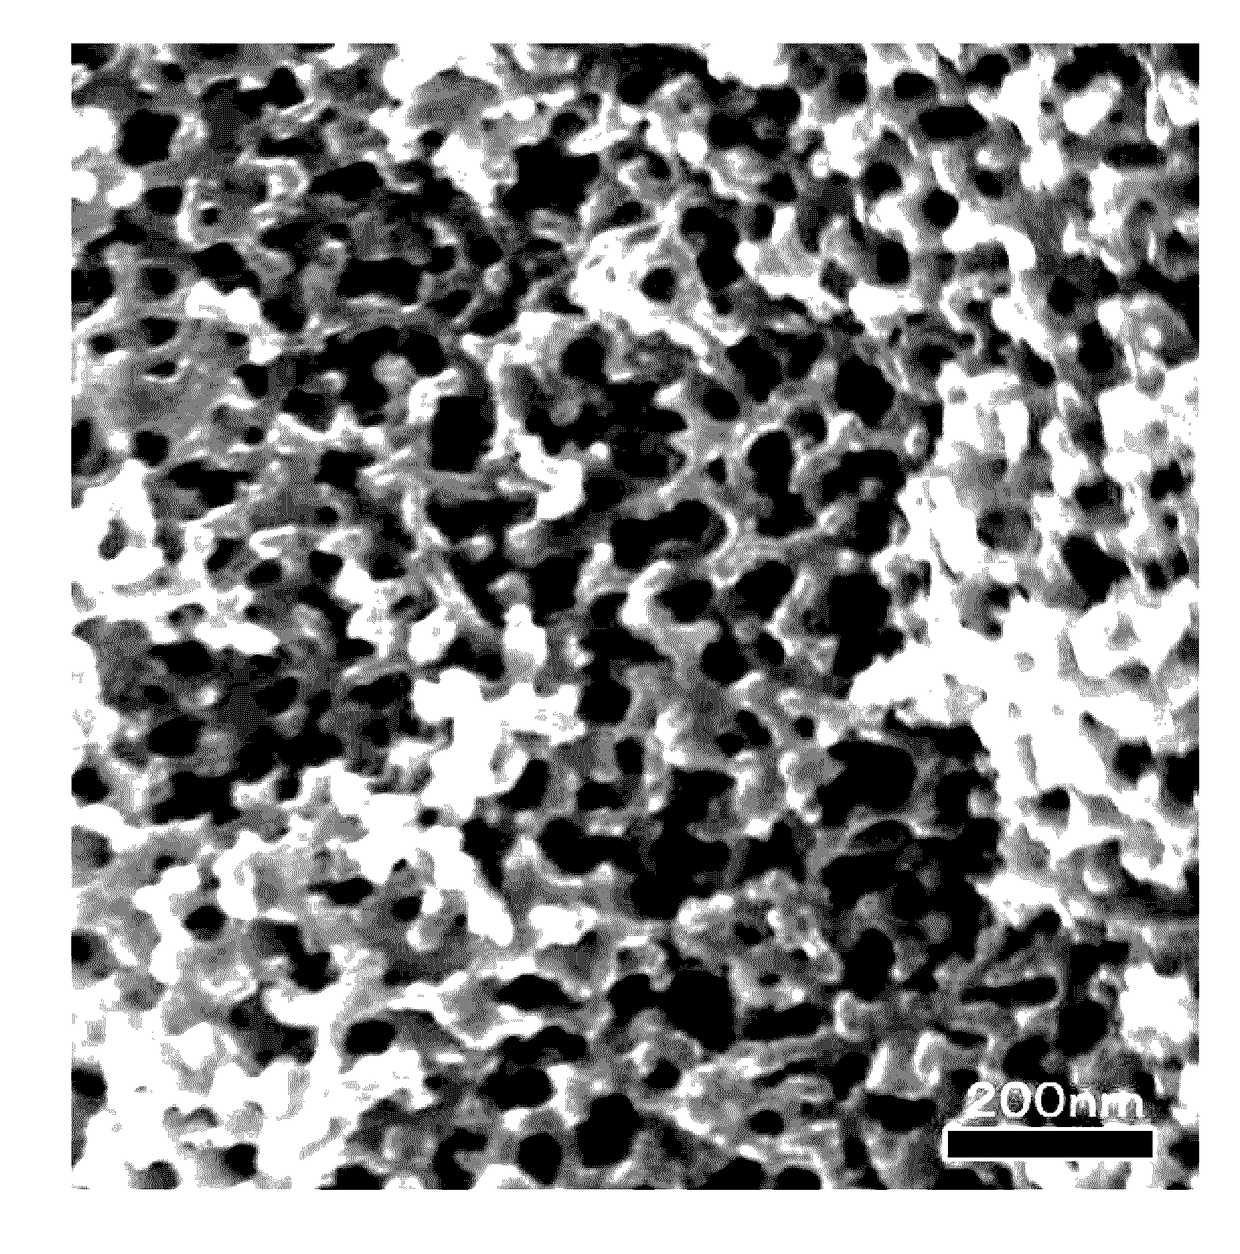 Porous carbon material